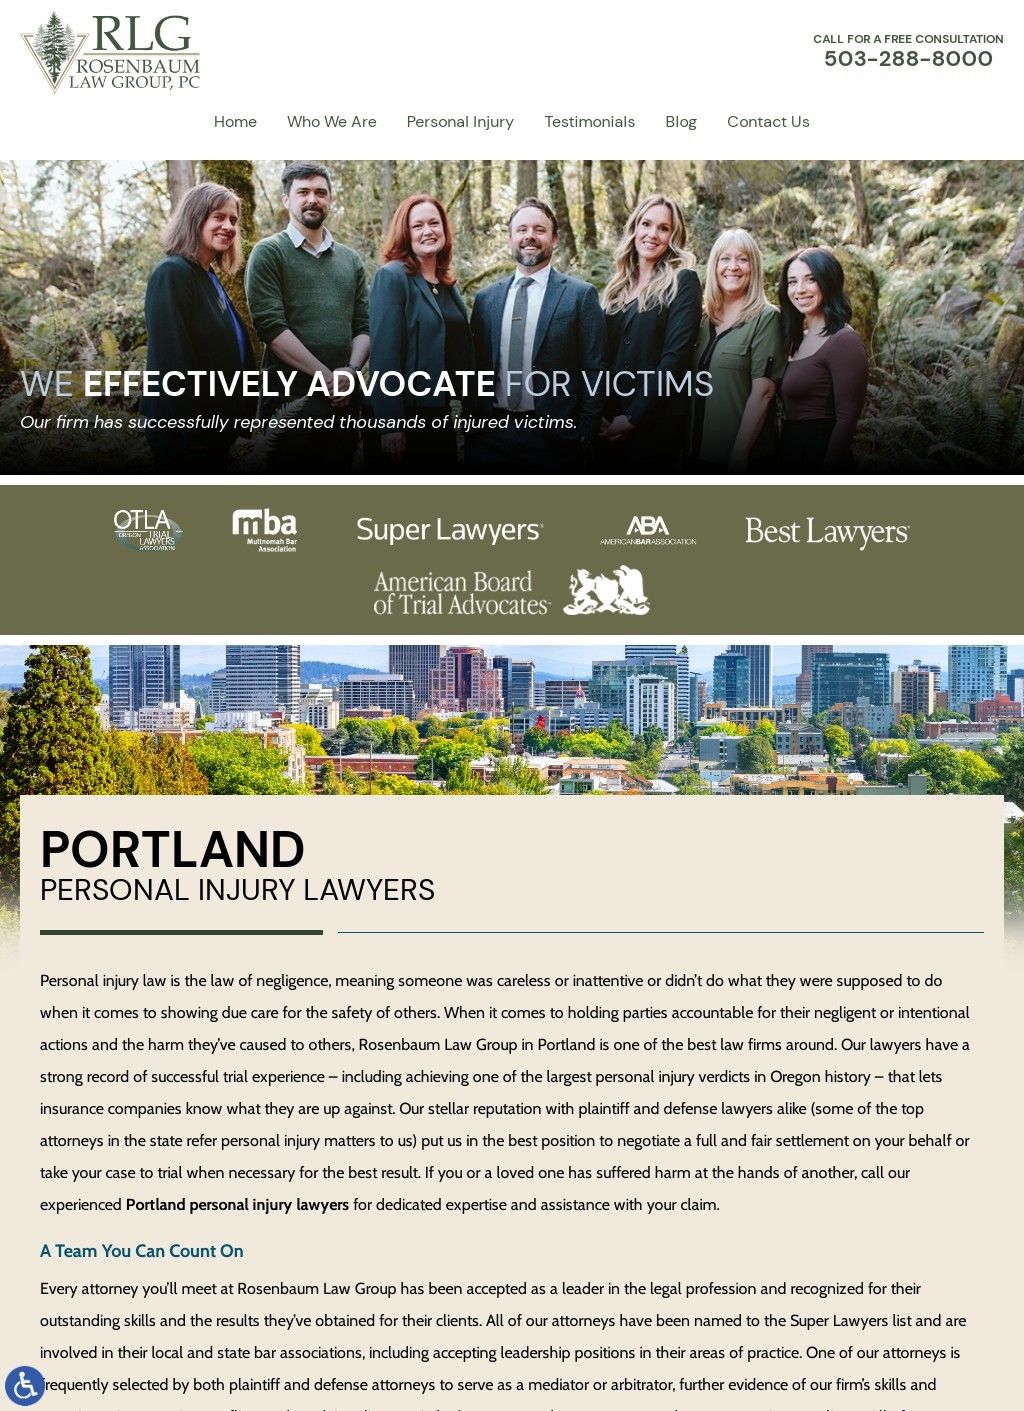 Portland Personal Injury Lawyer